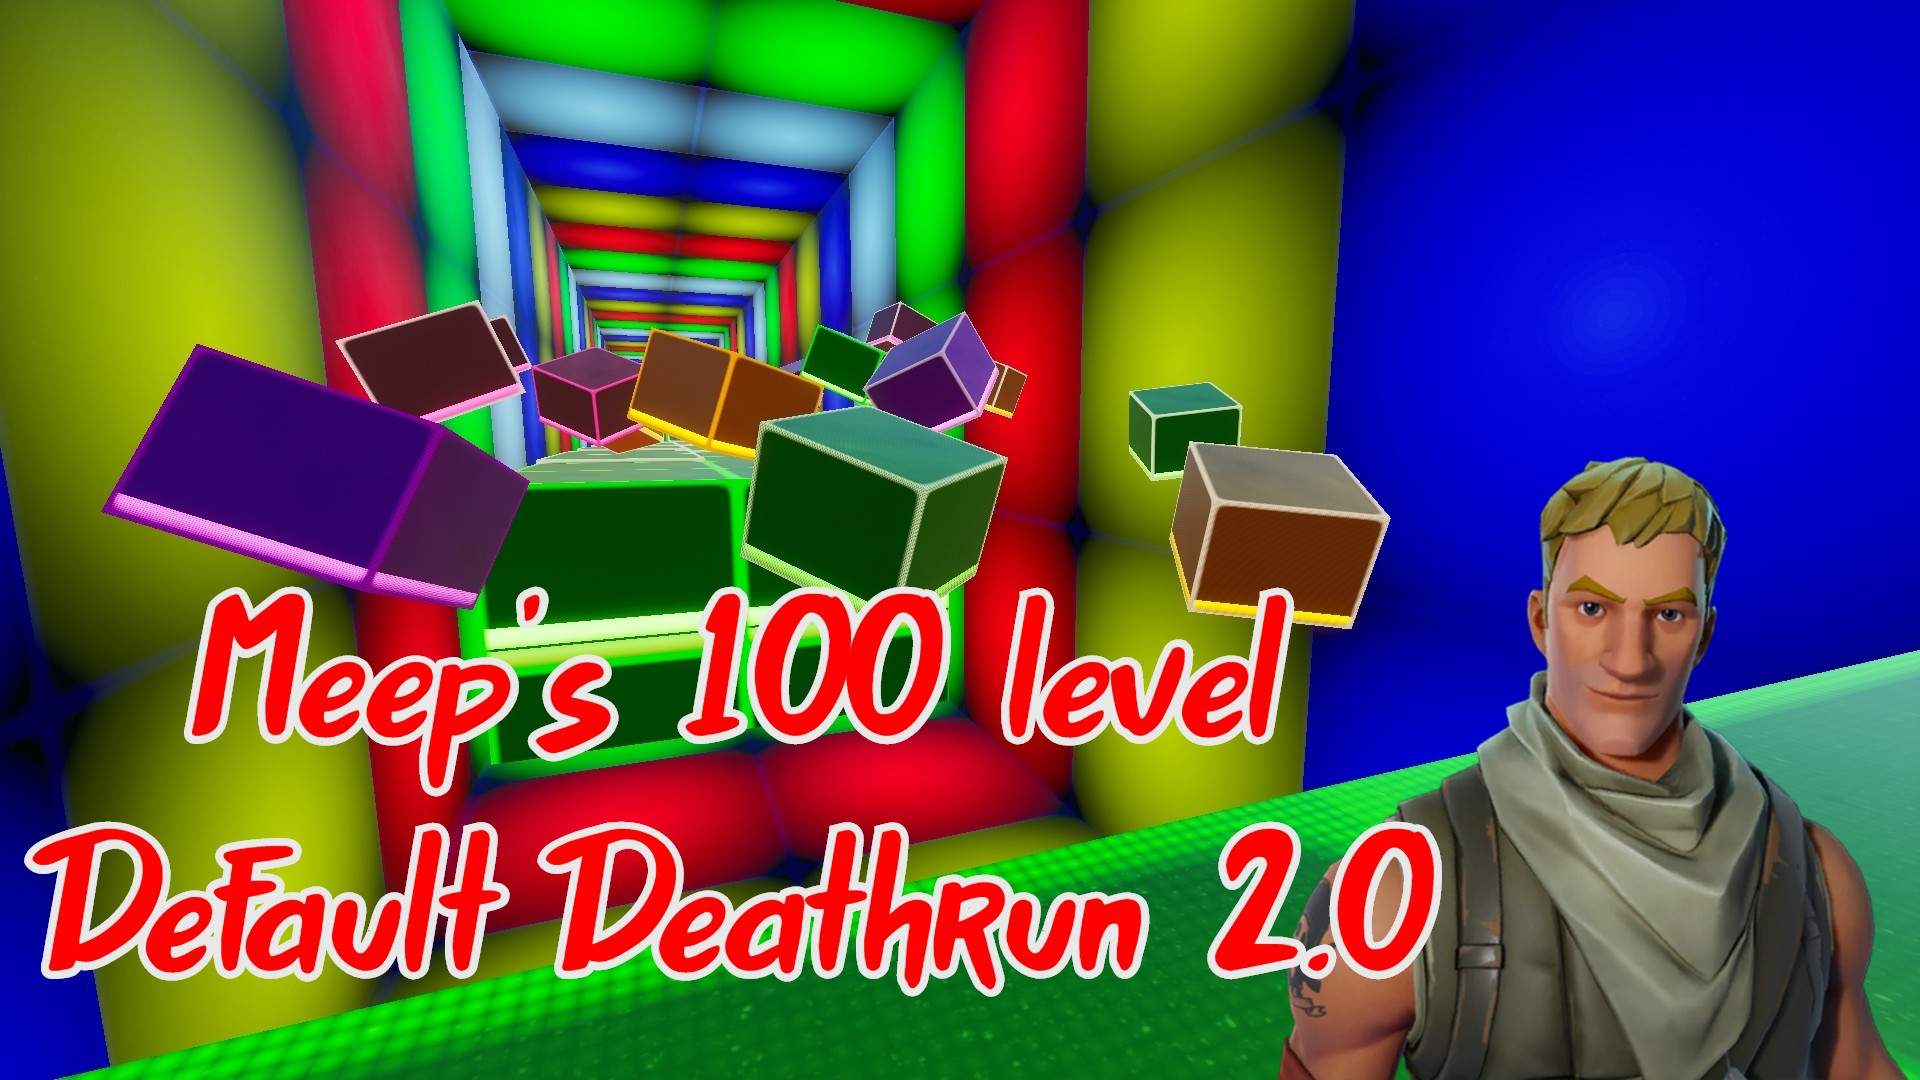 Fortnite 100 Level Default Deathrun Codes